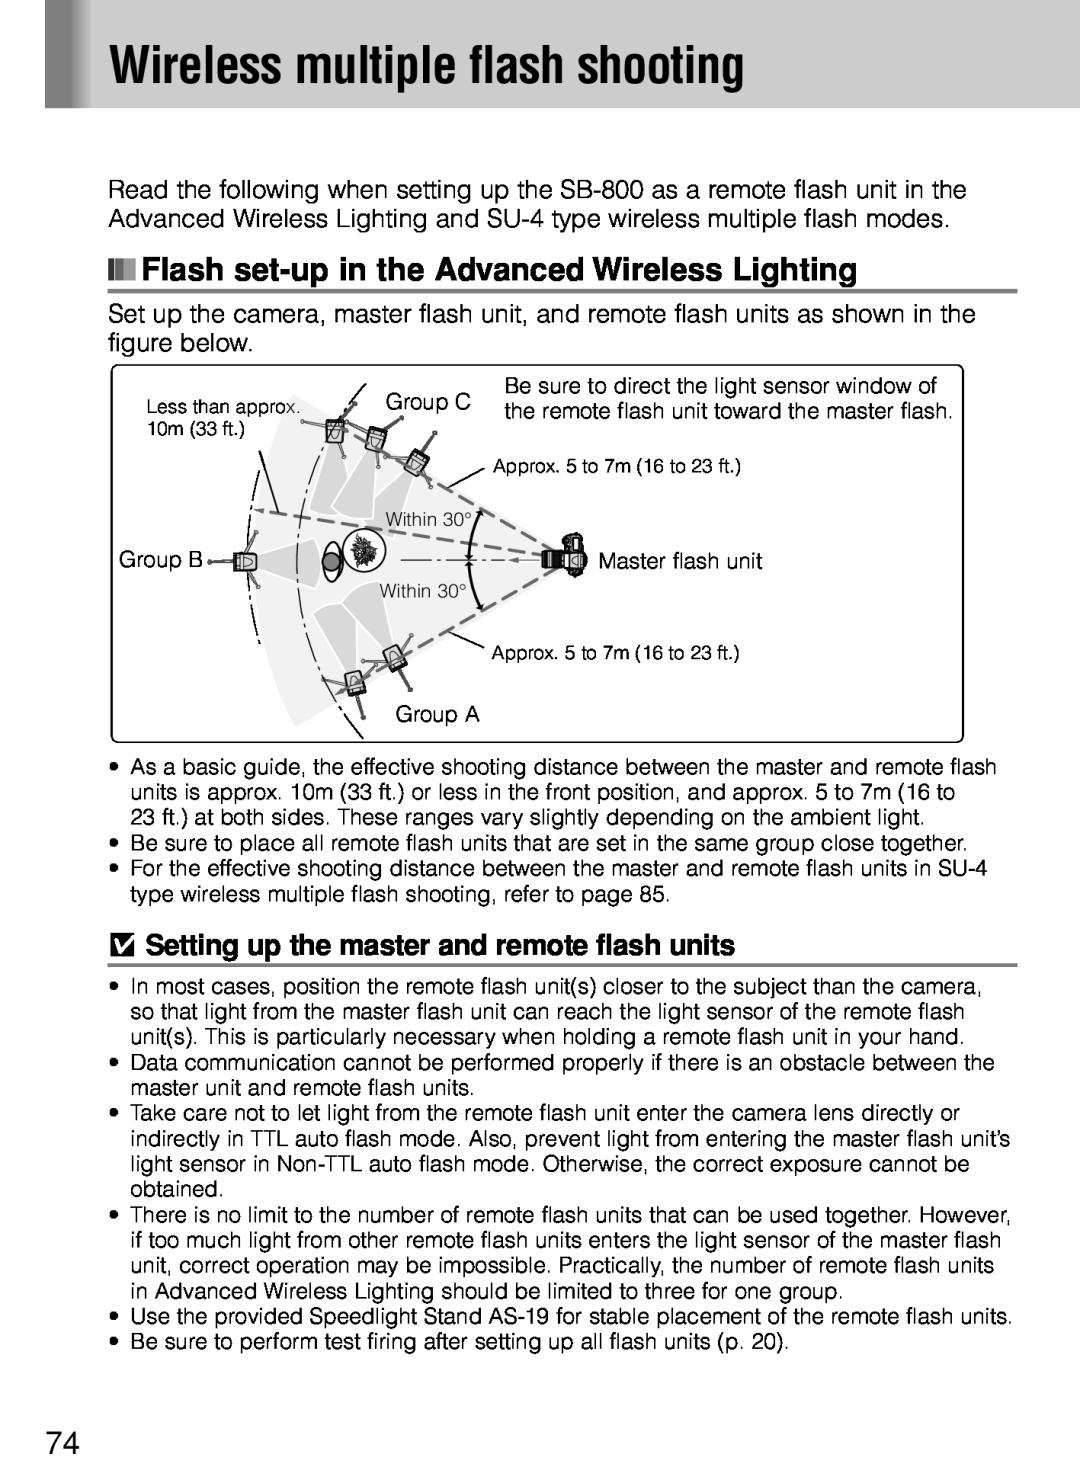 Nikon SB-800 instruction manual Wireless multiple flash shooting, Flash set-up in the Advanced Wireless Lighting 